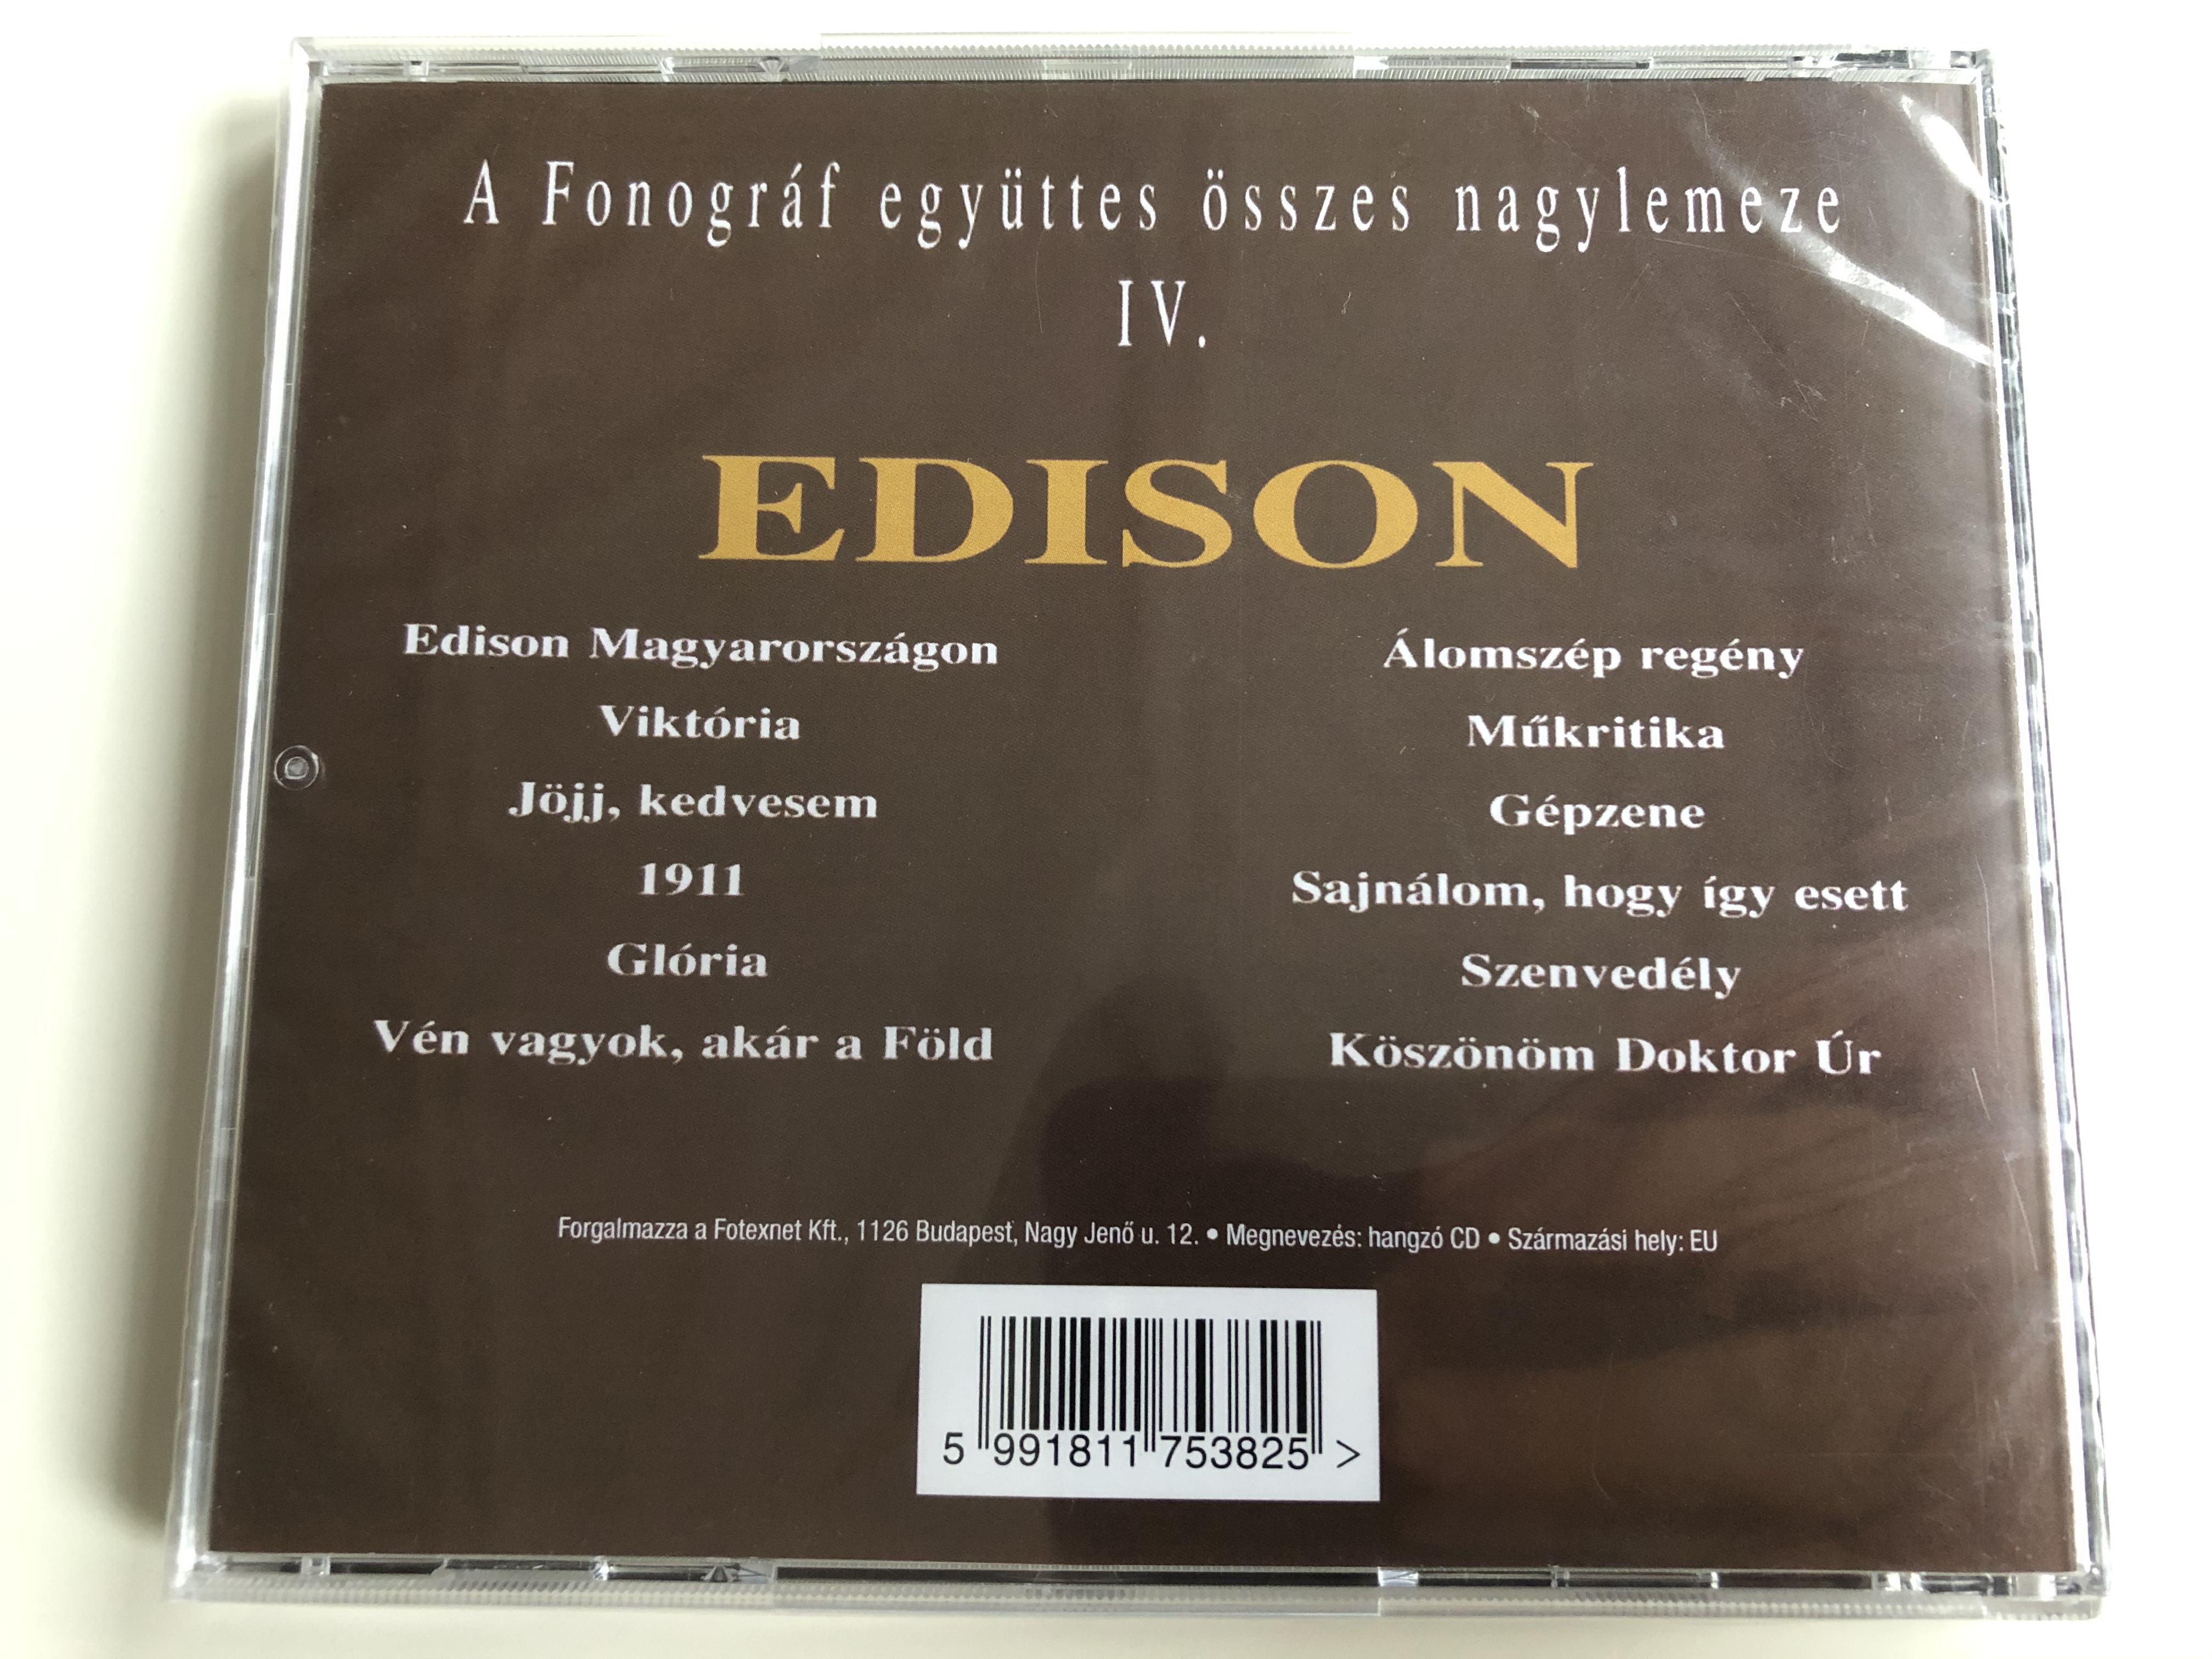 edison-fonogr-f-album-mega-audio-cd-1994-5991811753825-2-.jpg